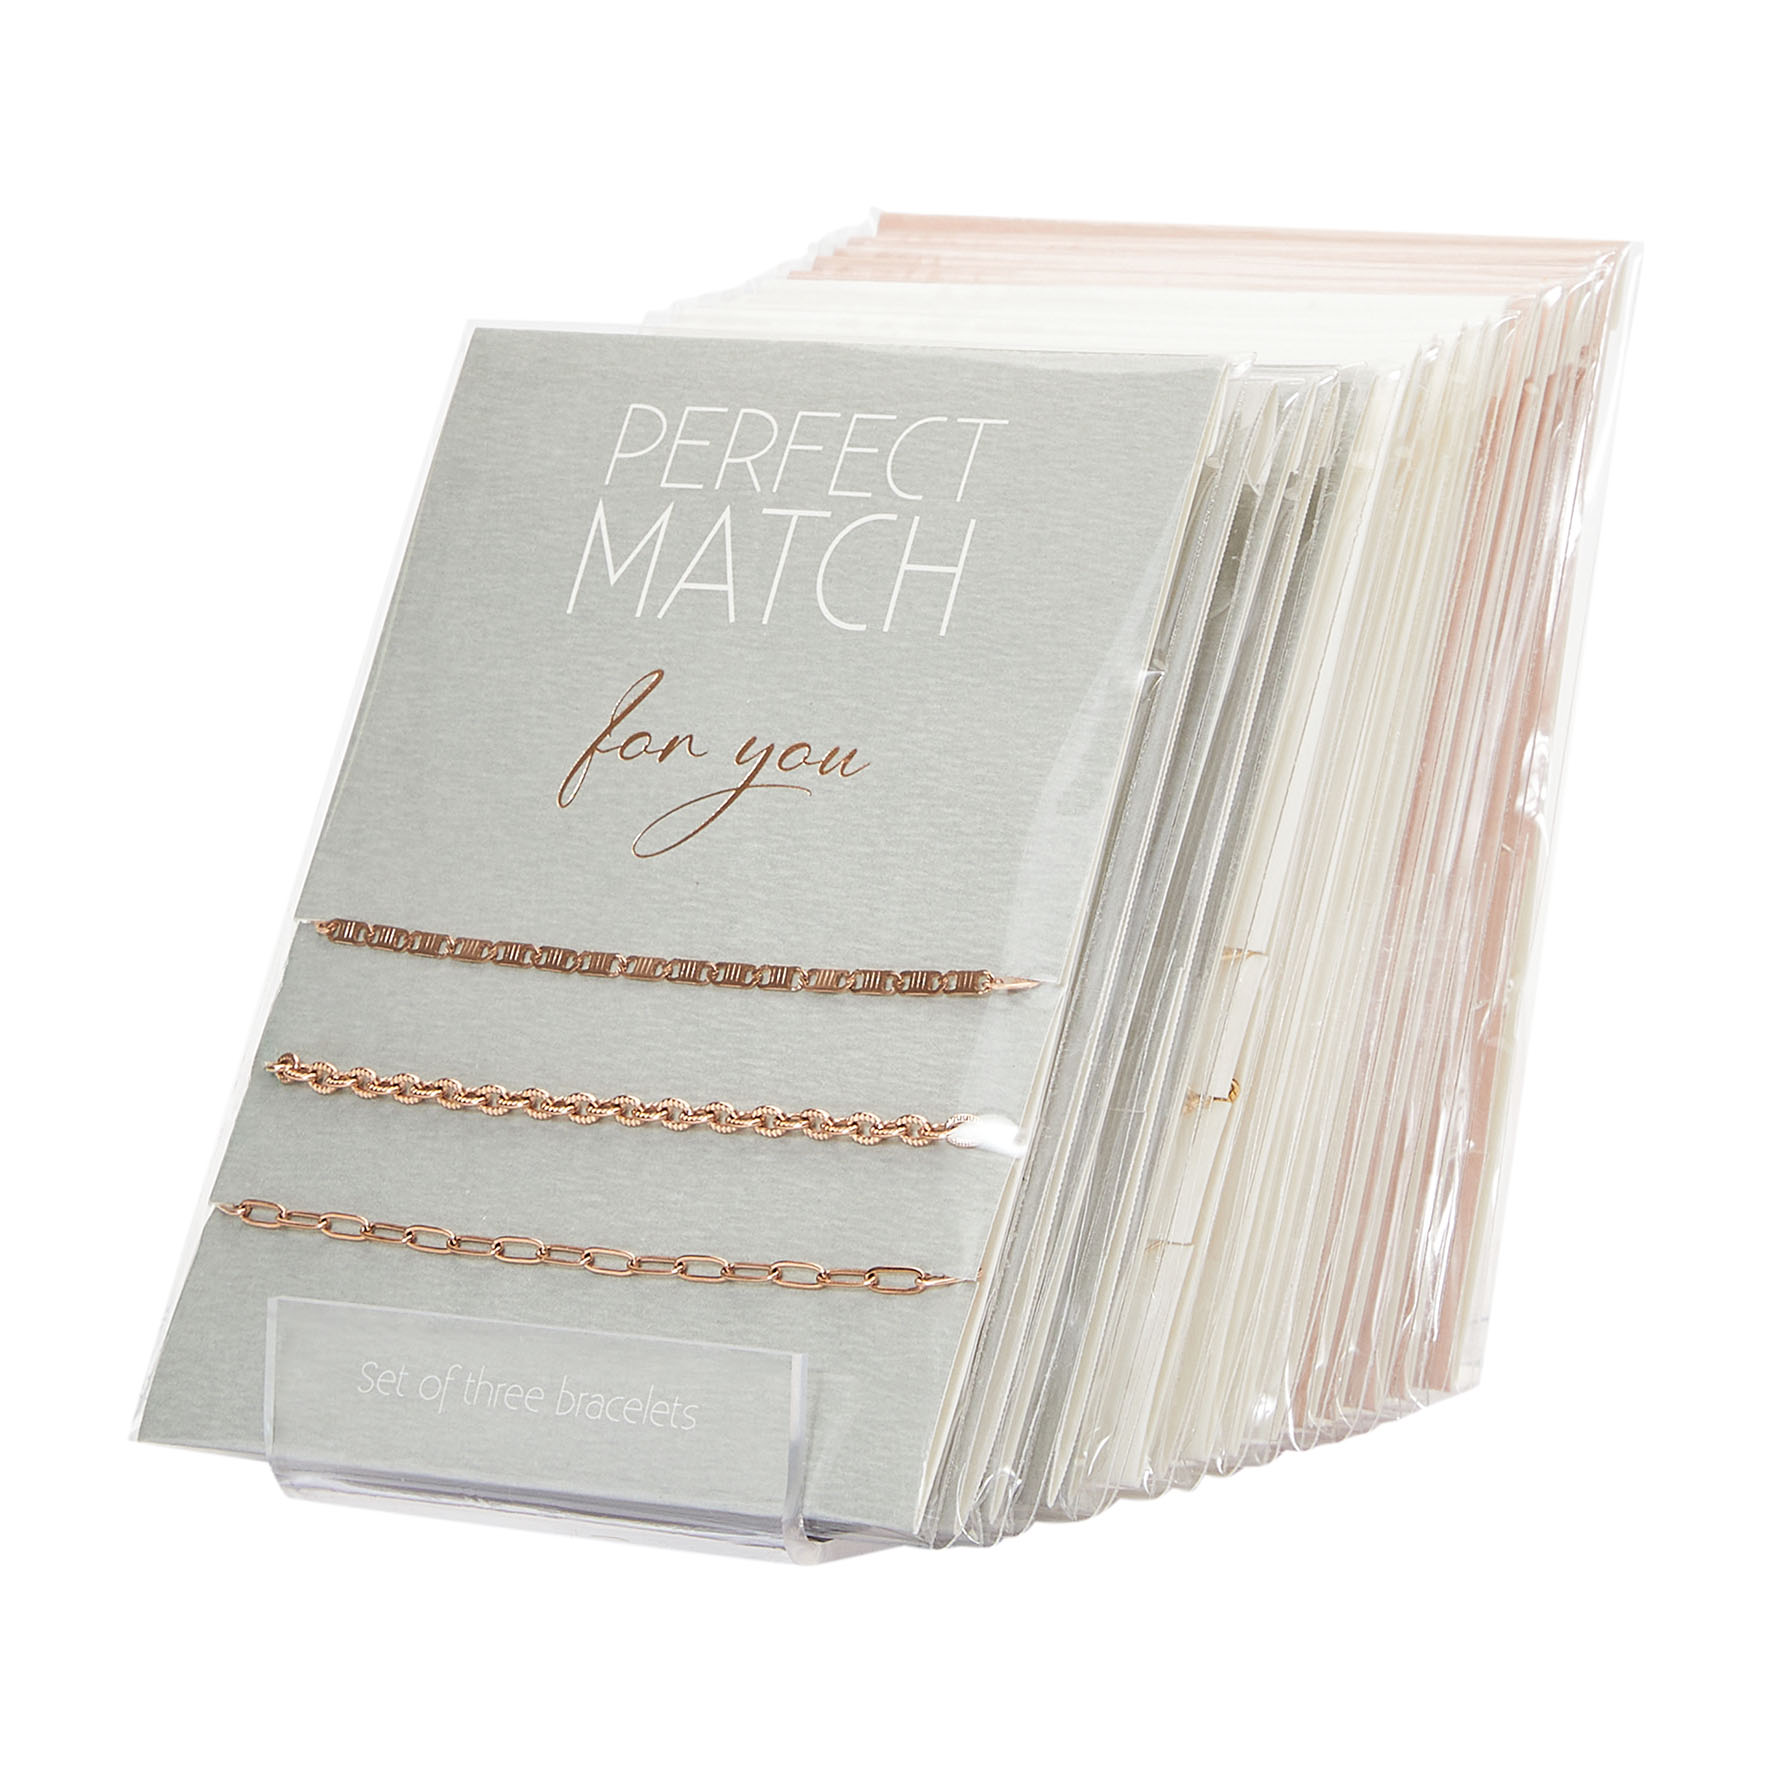 Display "Perfect match"